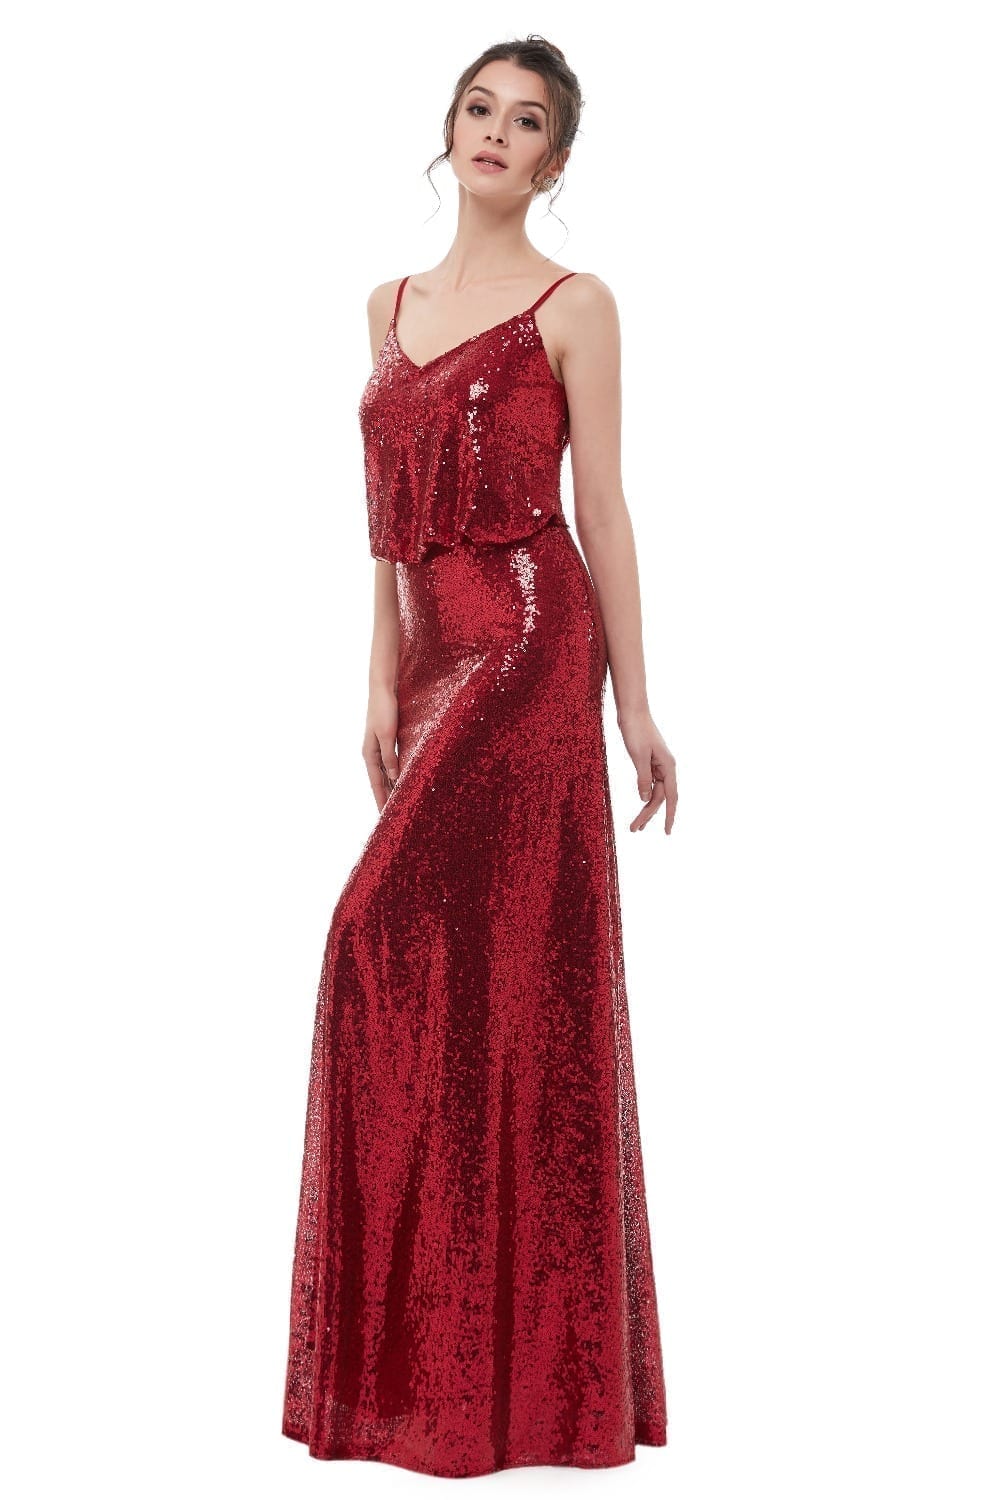 Elegant Wine Red Sequins Spaghetti Straps Long Bridesmaid Dress